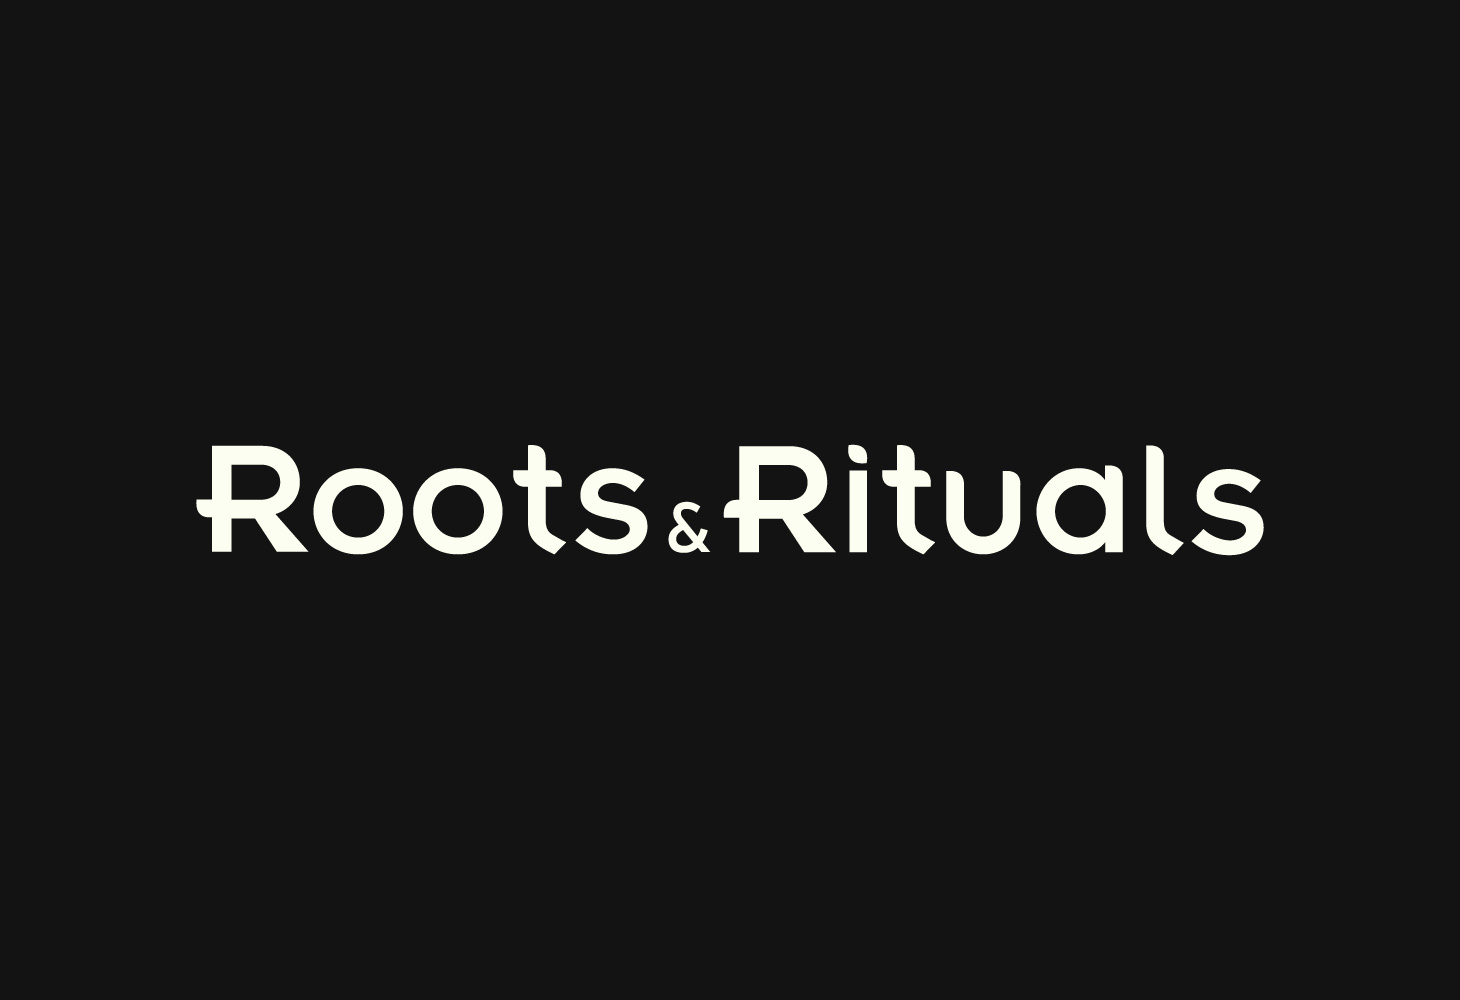 Roots & Rituals - Logotype refinement